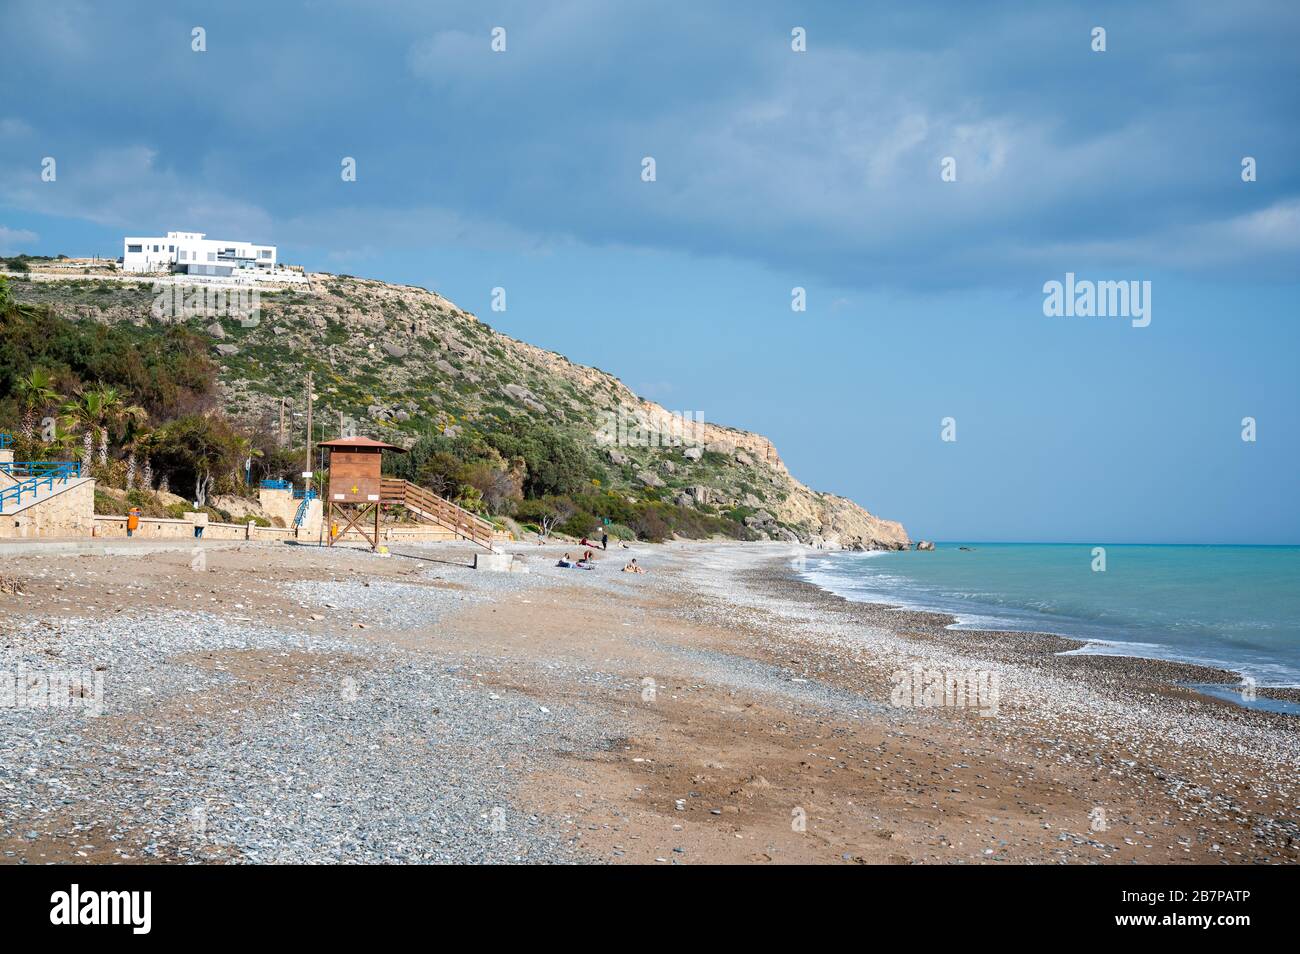 Empty beach at Pissouri, Pafos, Cyprus Stock Photo